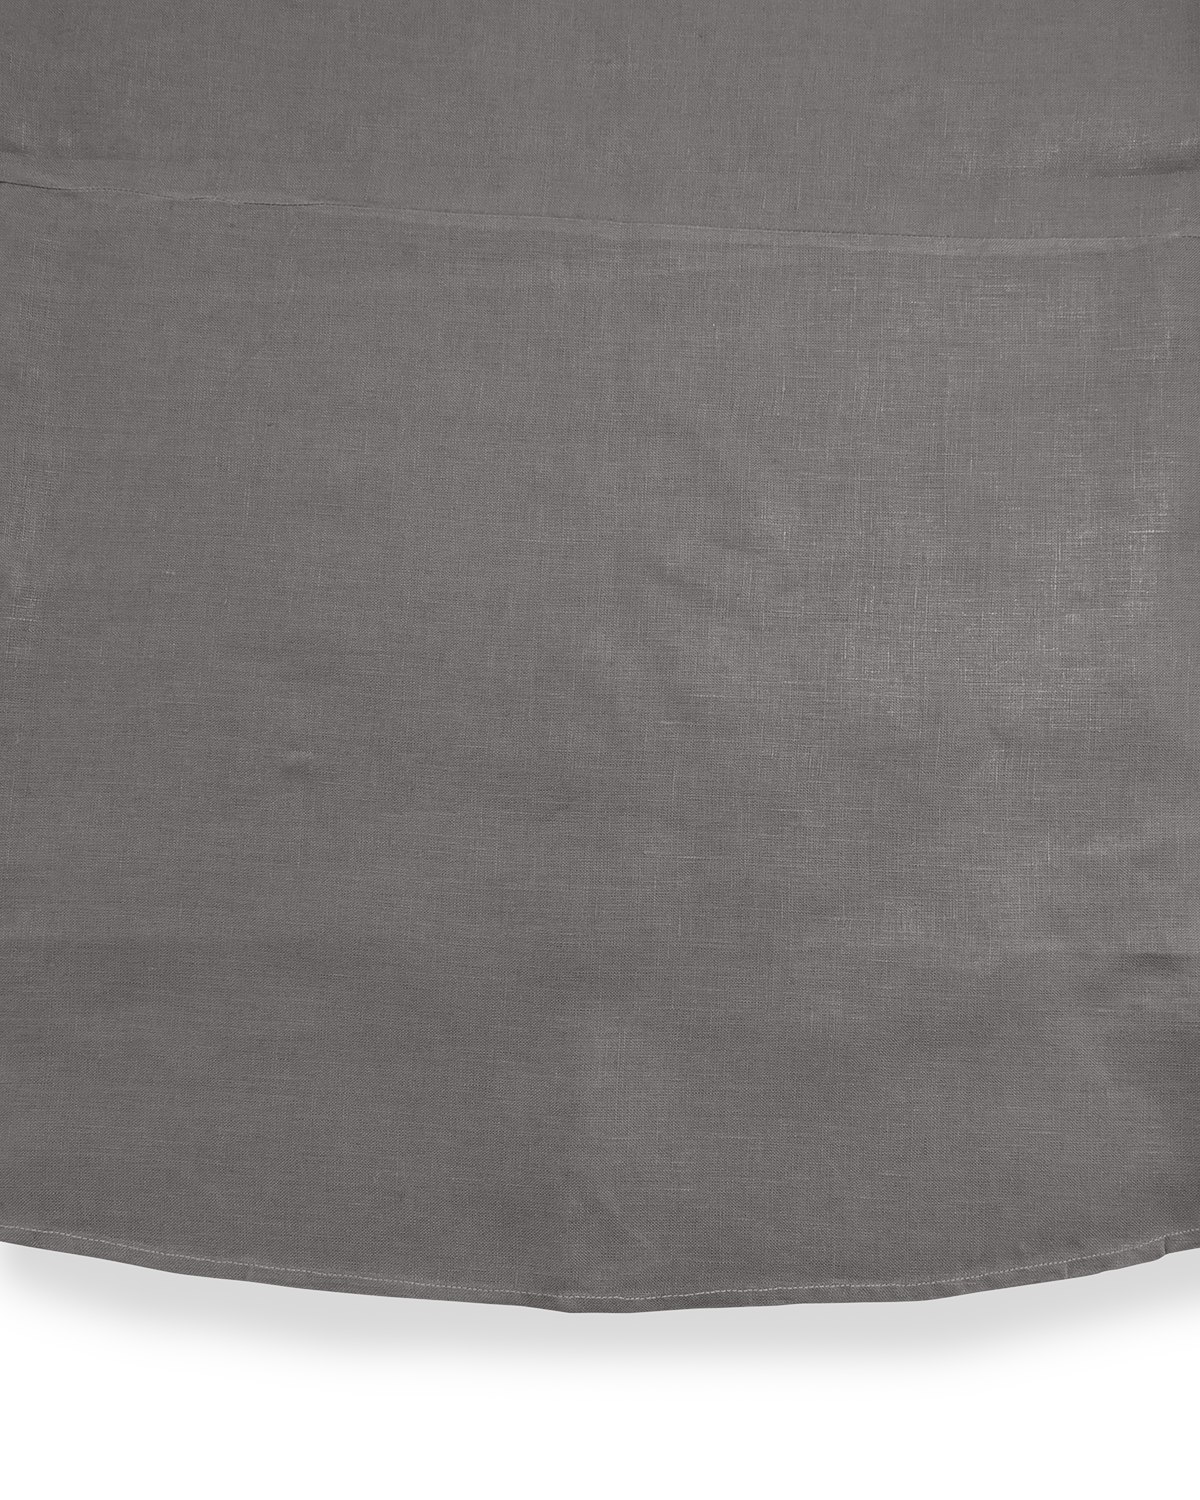 Shop Sferra Hemstitch Round Tablecloth, 90"dia. In Grey